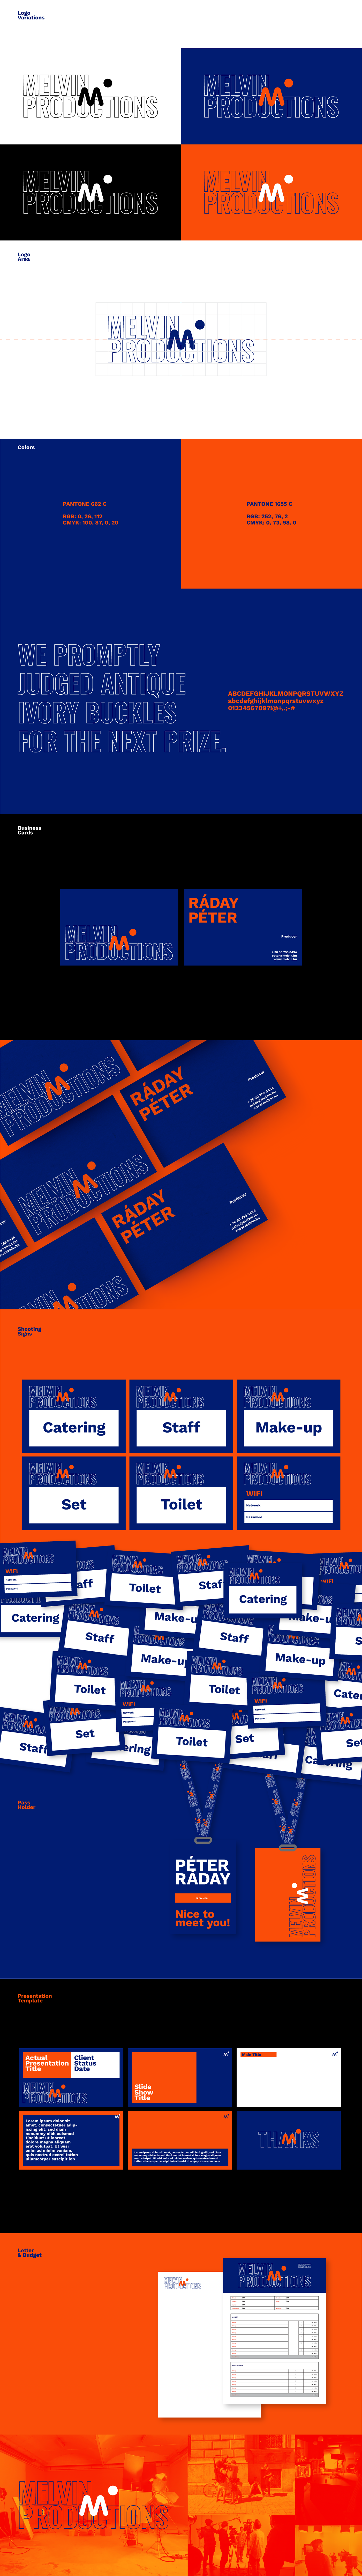 melvin productions identity orange blue minimal Style art direction  new style TRENDING